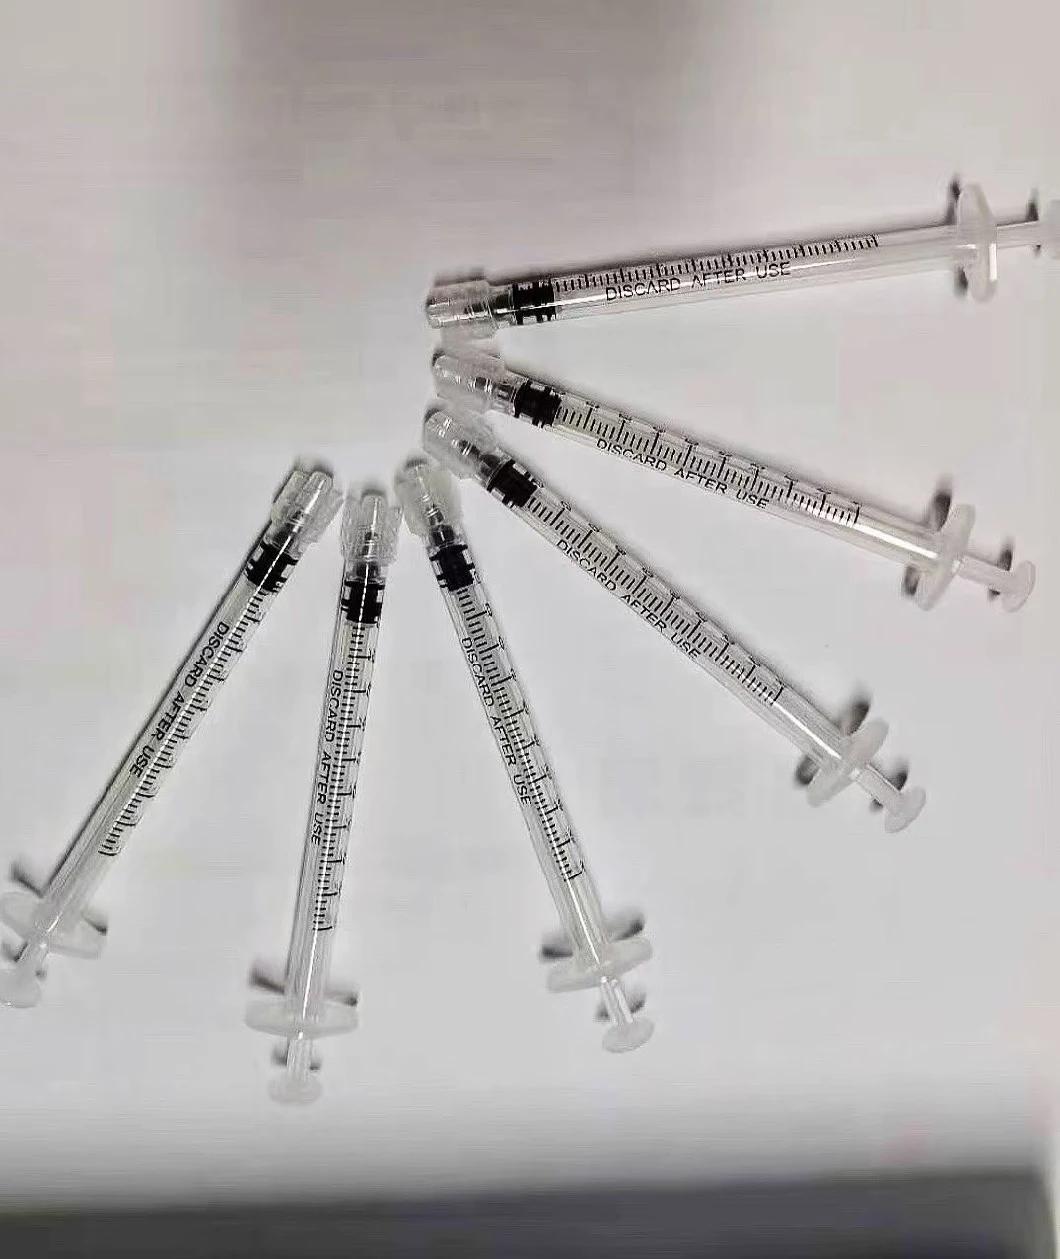 Direct Factory 1 Ml Cc Disposable Medical Plastic Luer Lock Syringe